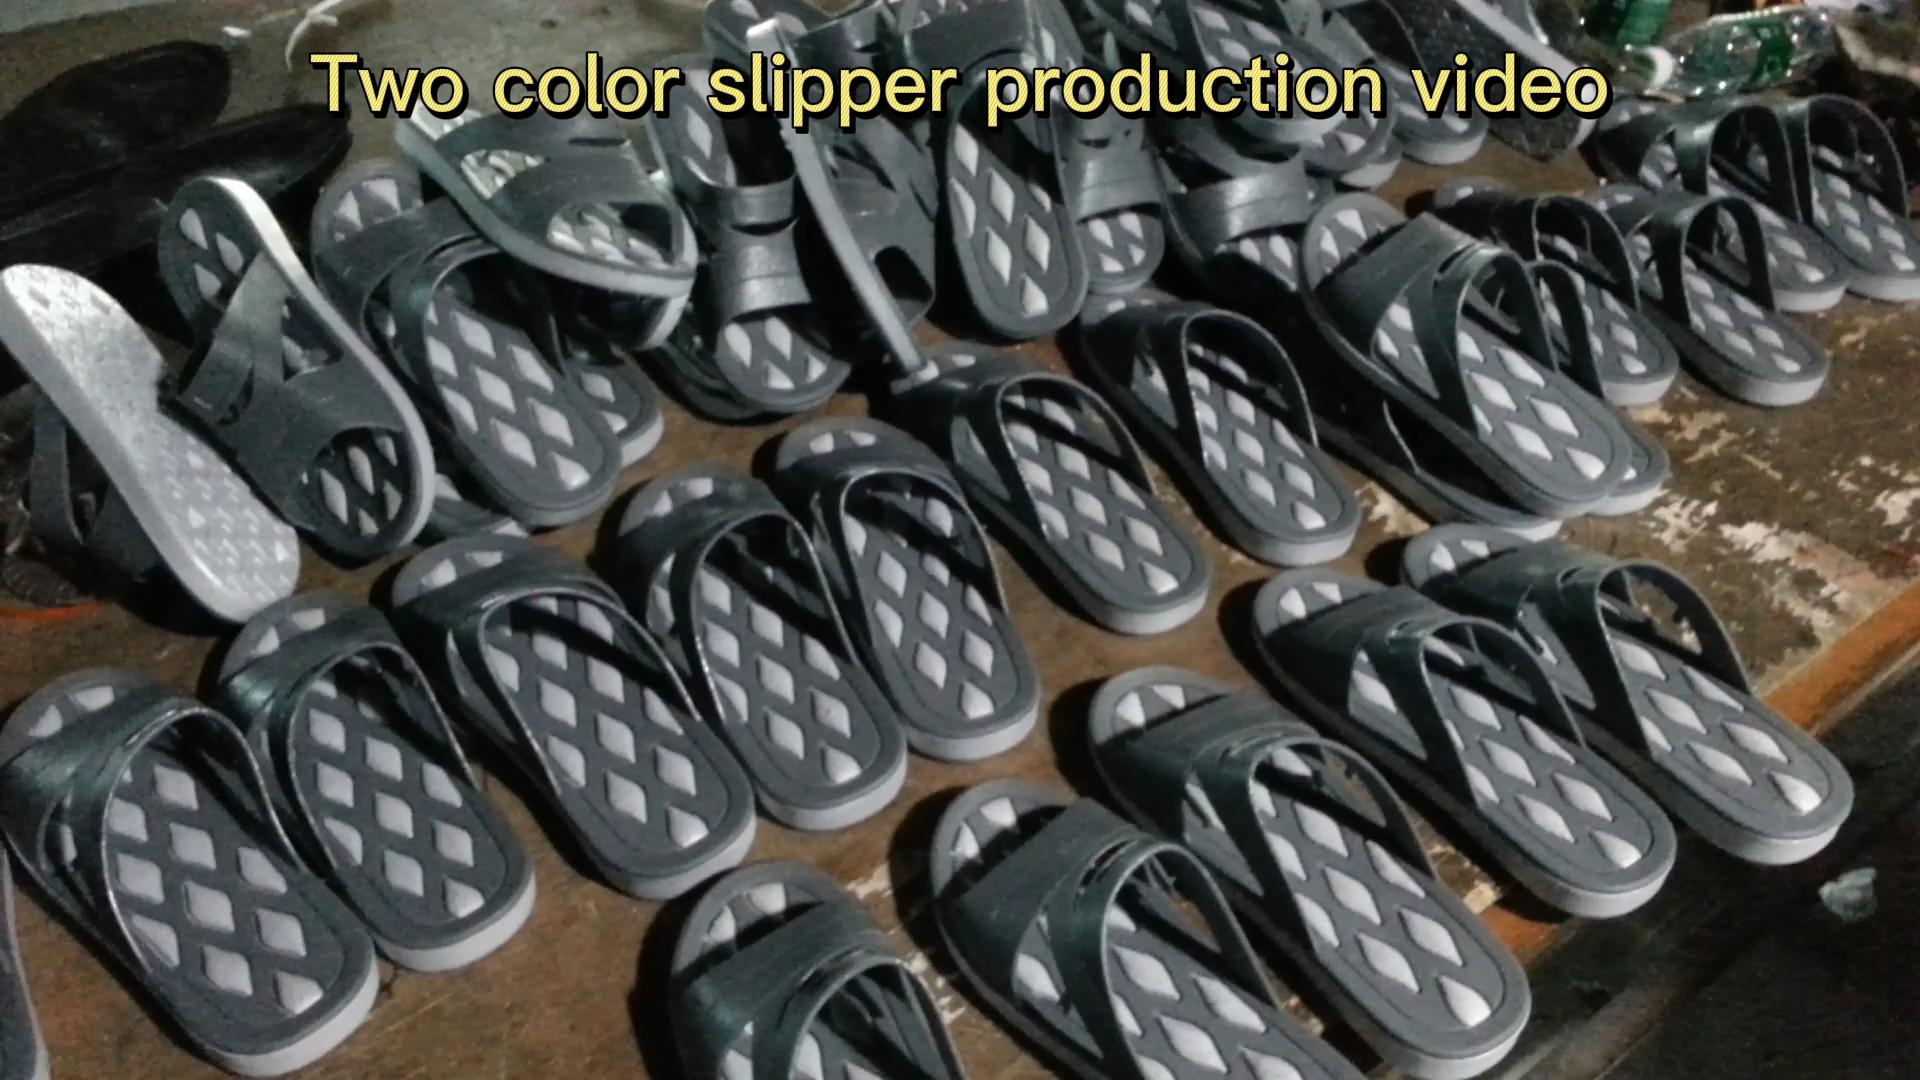 Video di produzione di pantofole a due colori